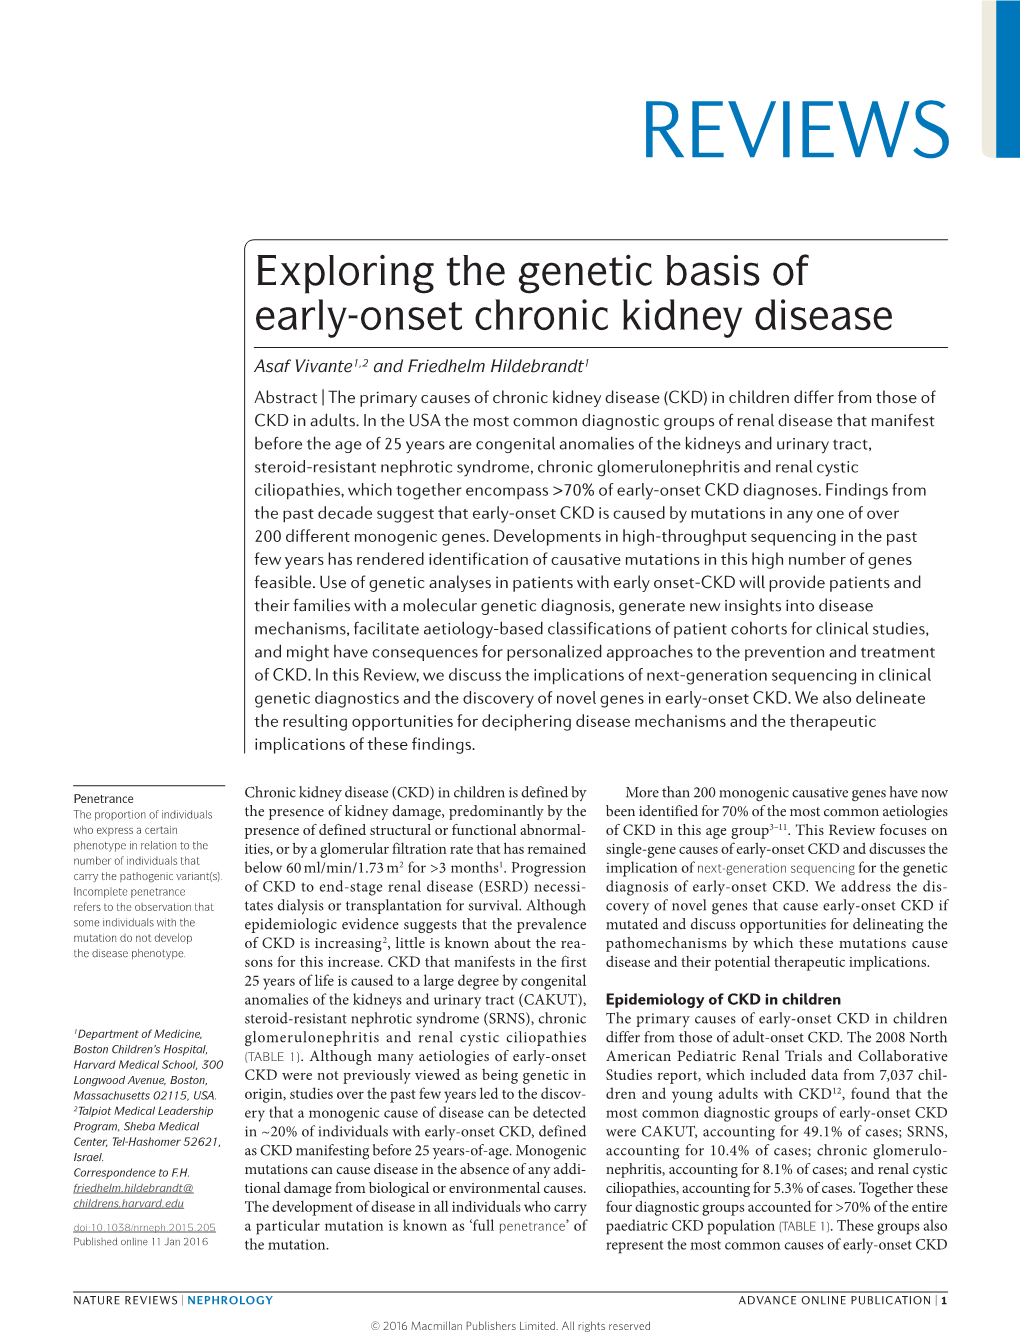 Exploring the Genetic Basis of Early-Onset Chronic Kidney Disease